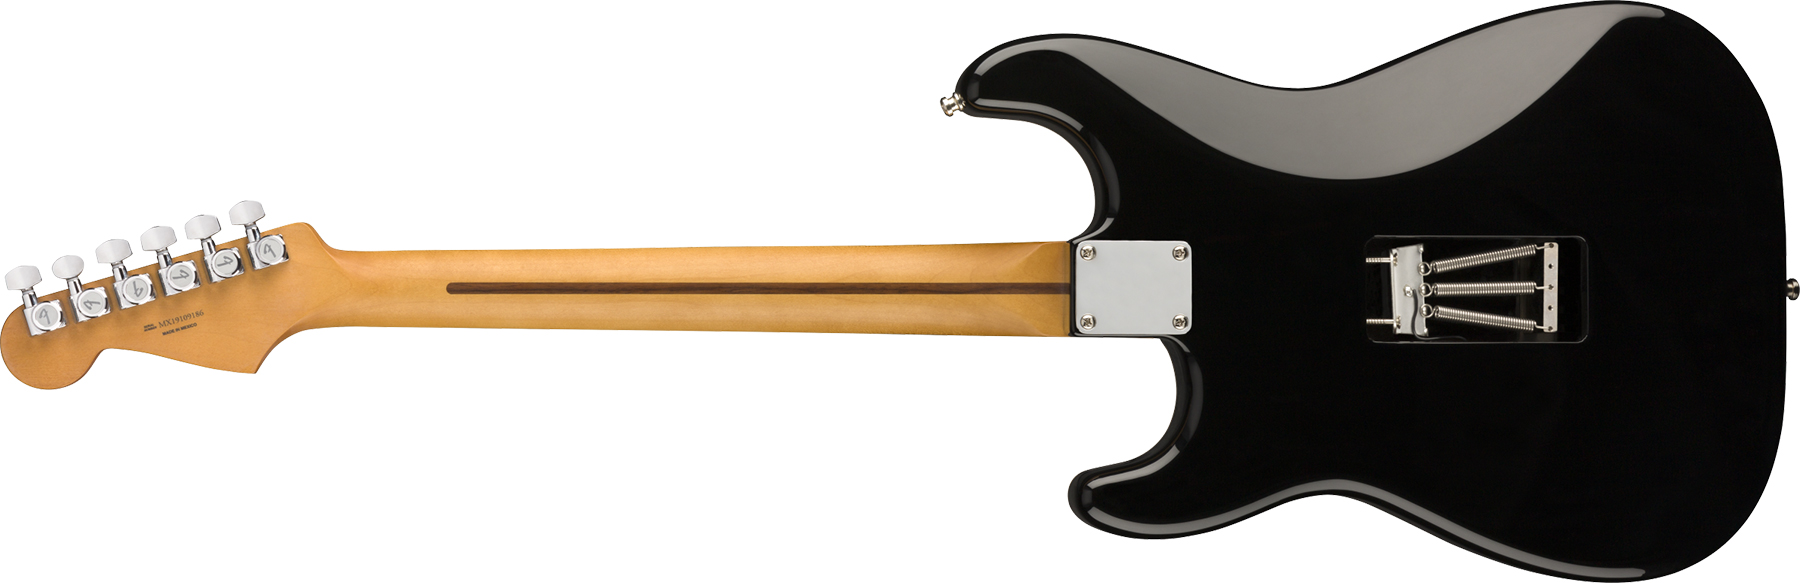 Fender Tom Morello Strat Mex Signature Hss Fr Rw - Black - Str shape electric guitar - Variation 1